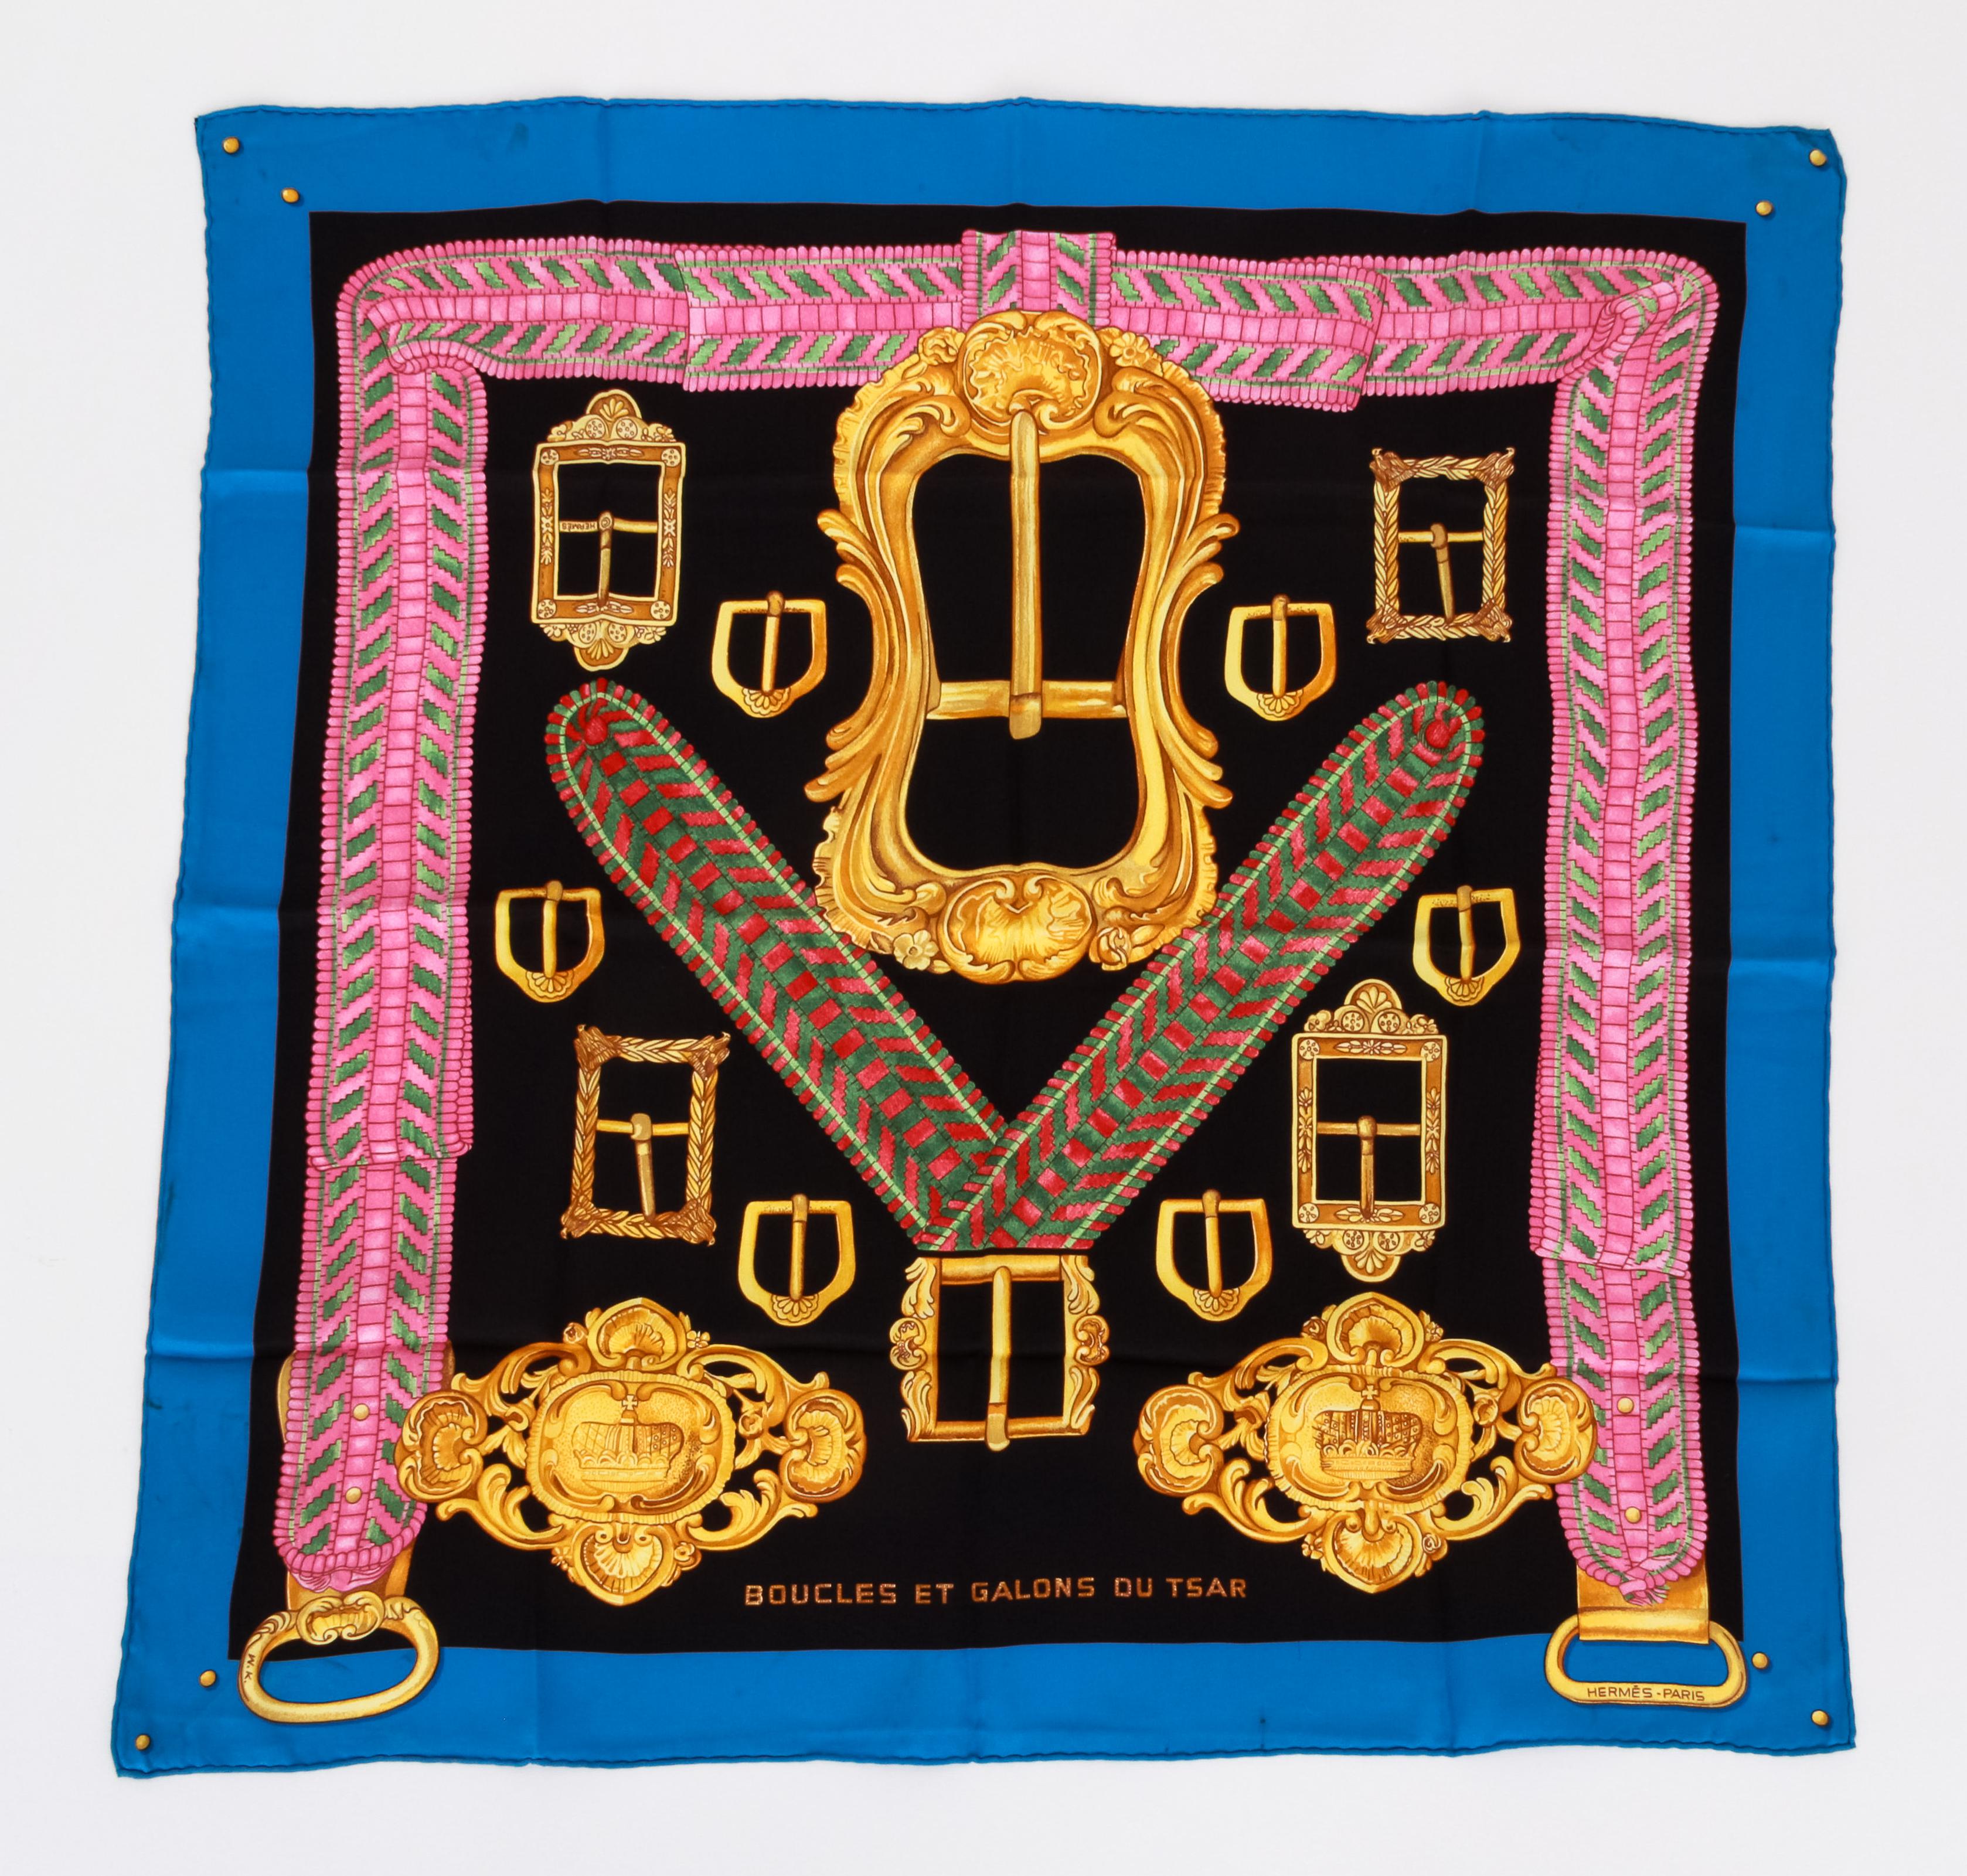 Hermes boucles et galon du Tsar medium silk scarf. Blue, black, yellow and pink.
26 x 26